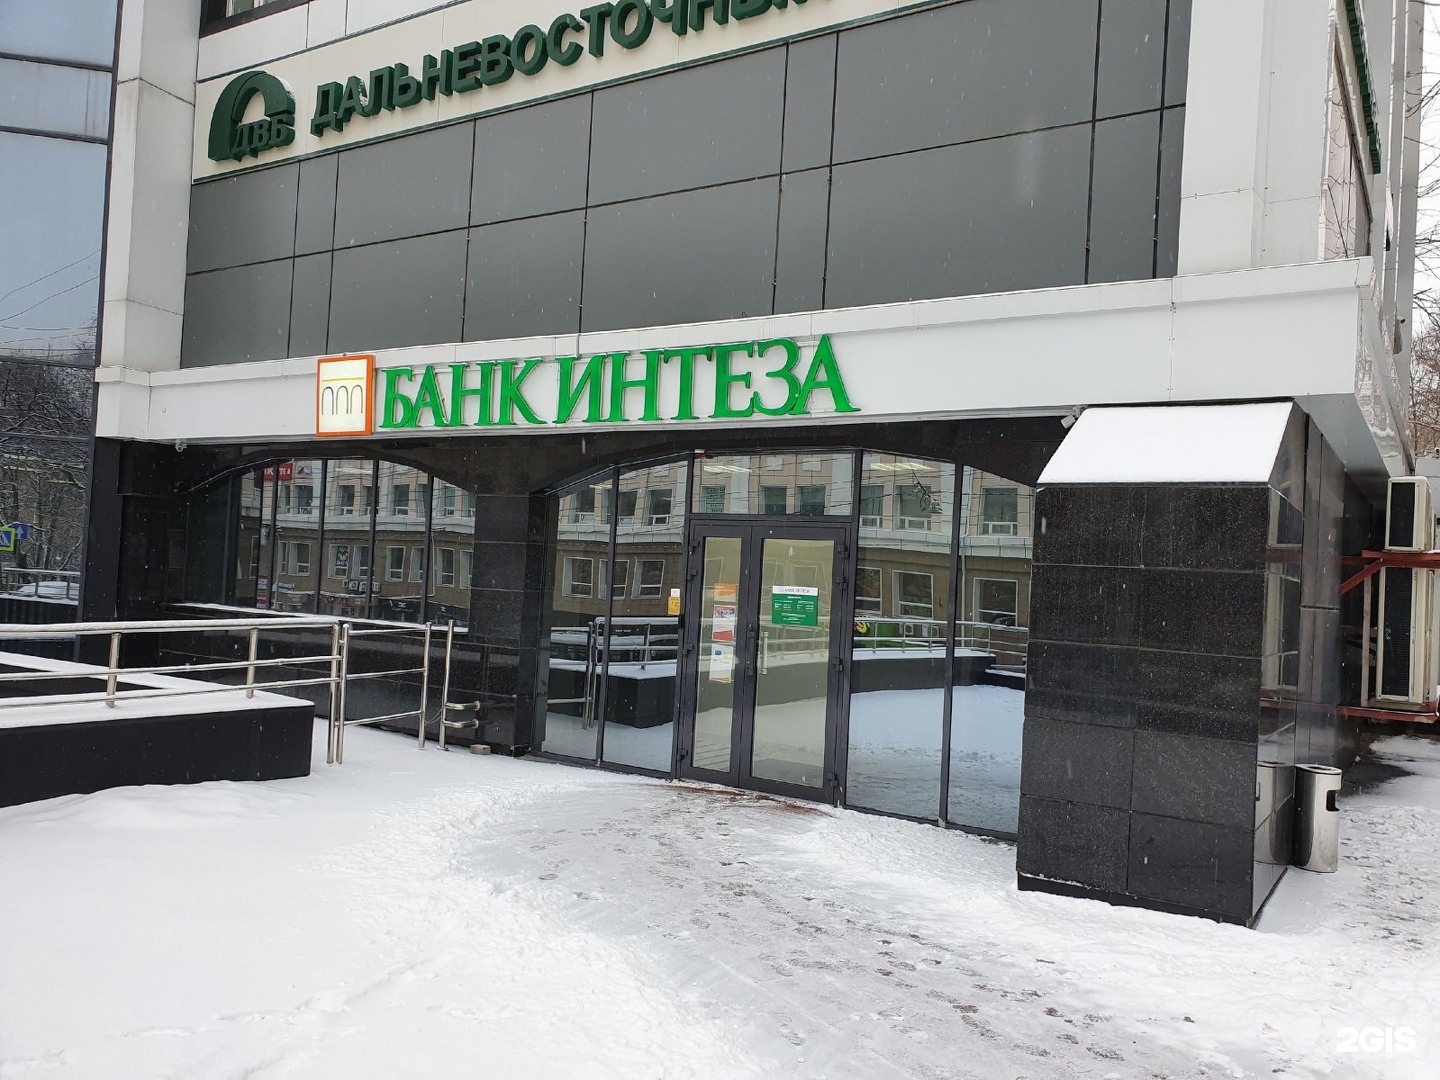 Вход в банк интеза. Банк Интеза. Банк Интеза фото. Литейный 57. Банк Интеза Екатеринбург.